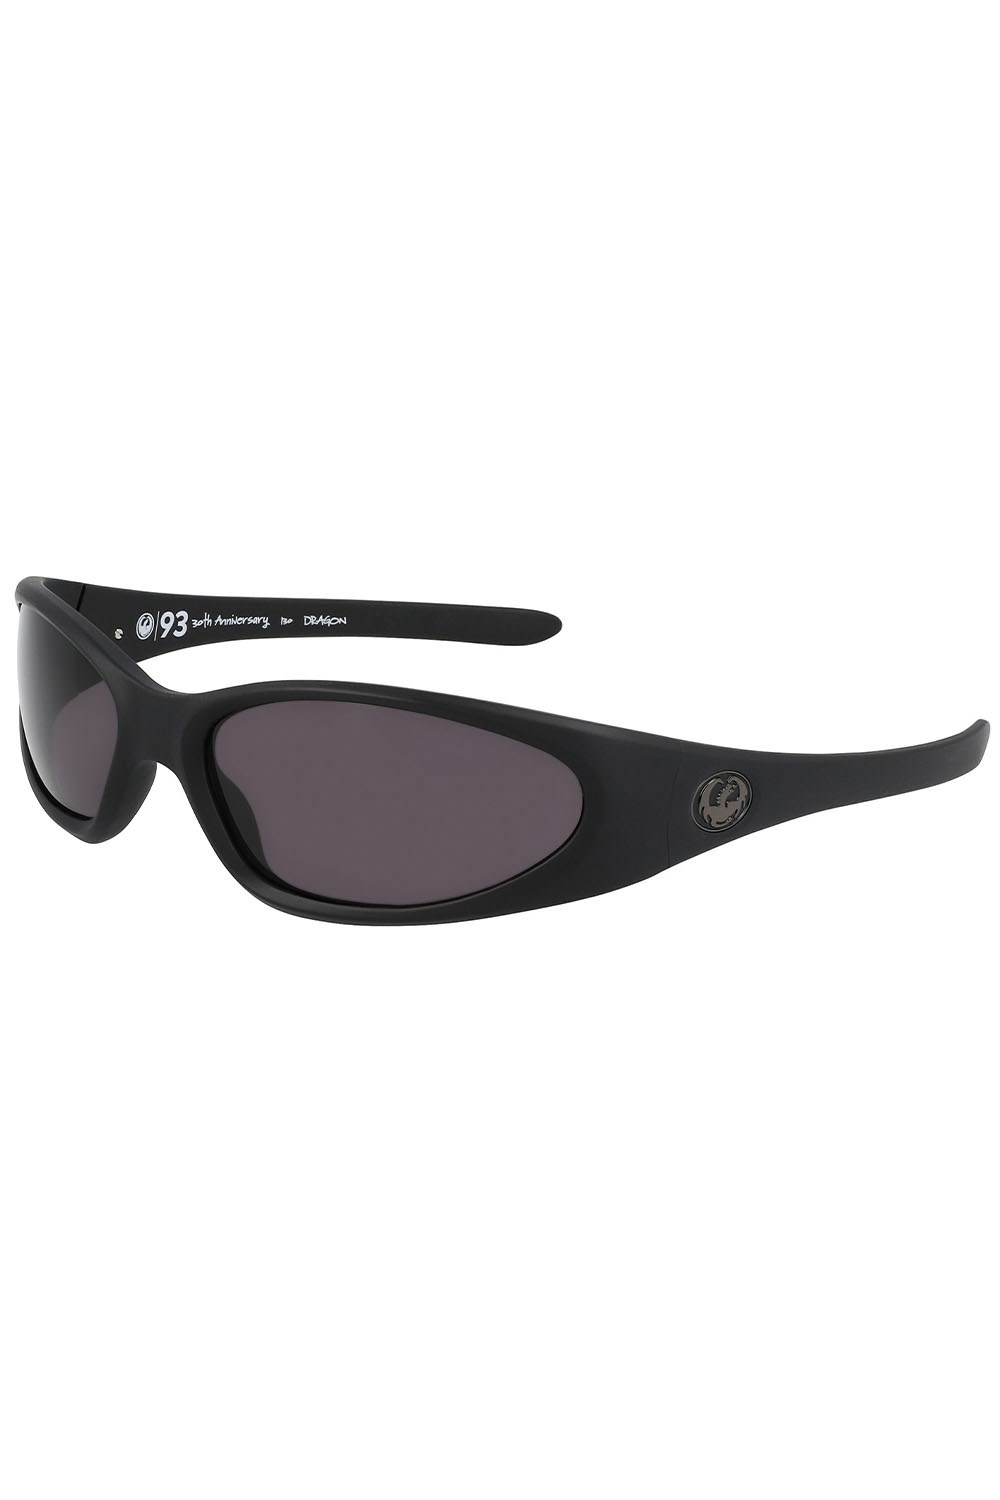 The Box Unisex Sunglasses -